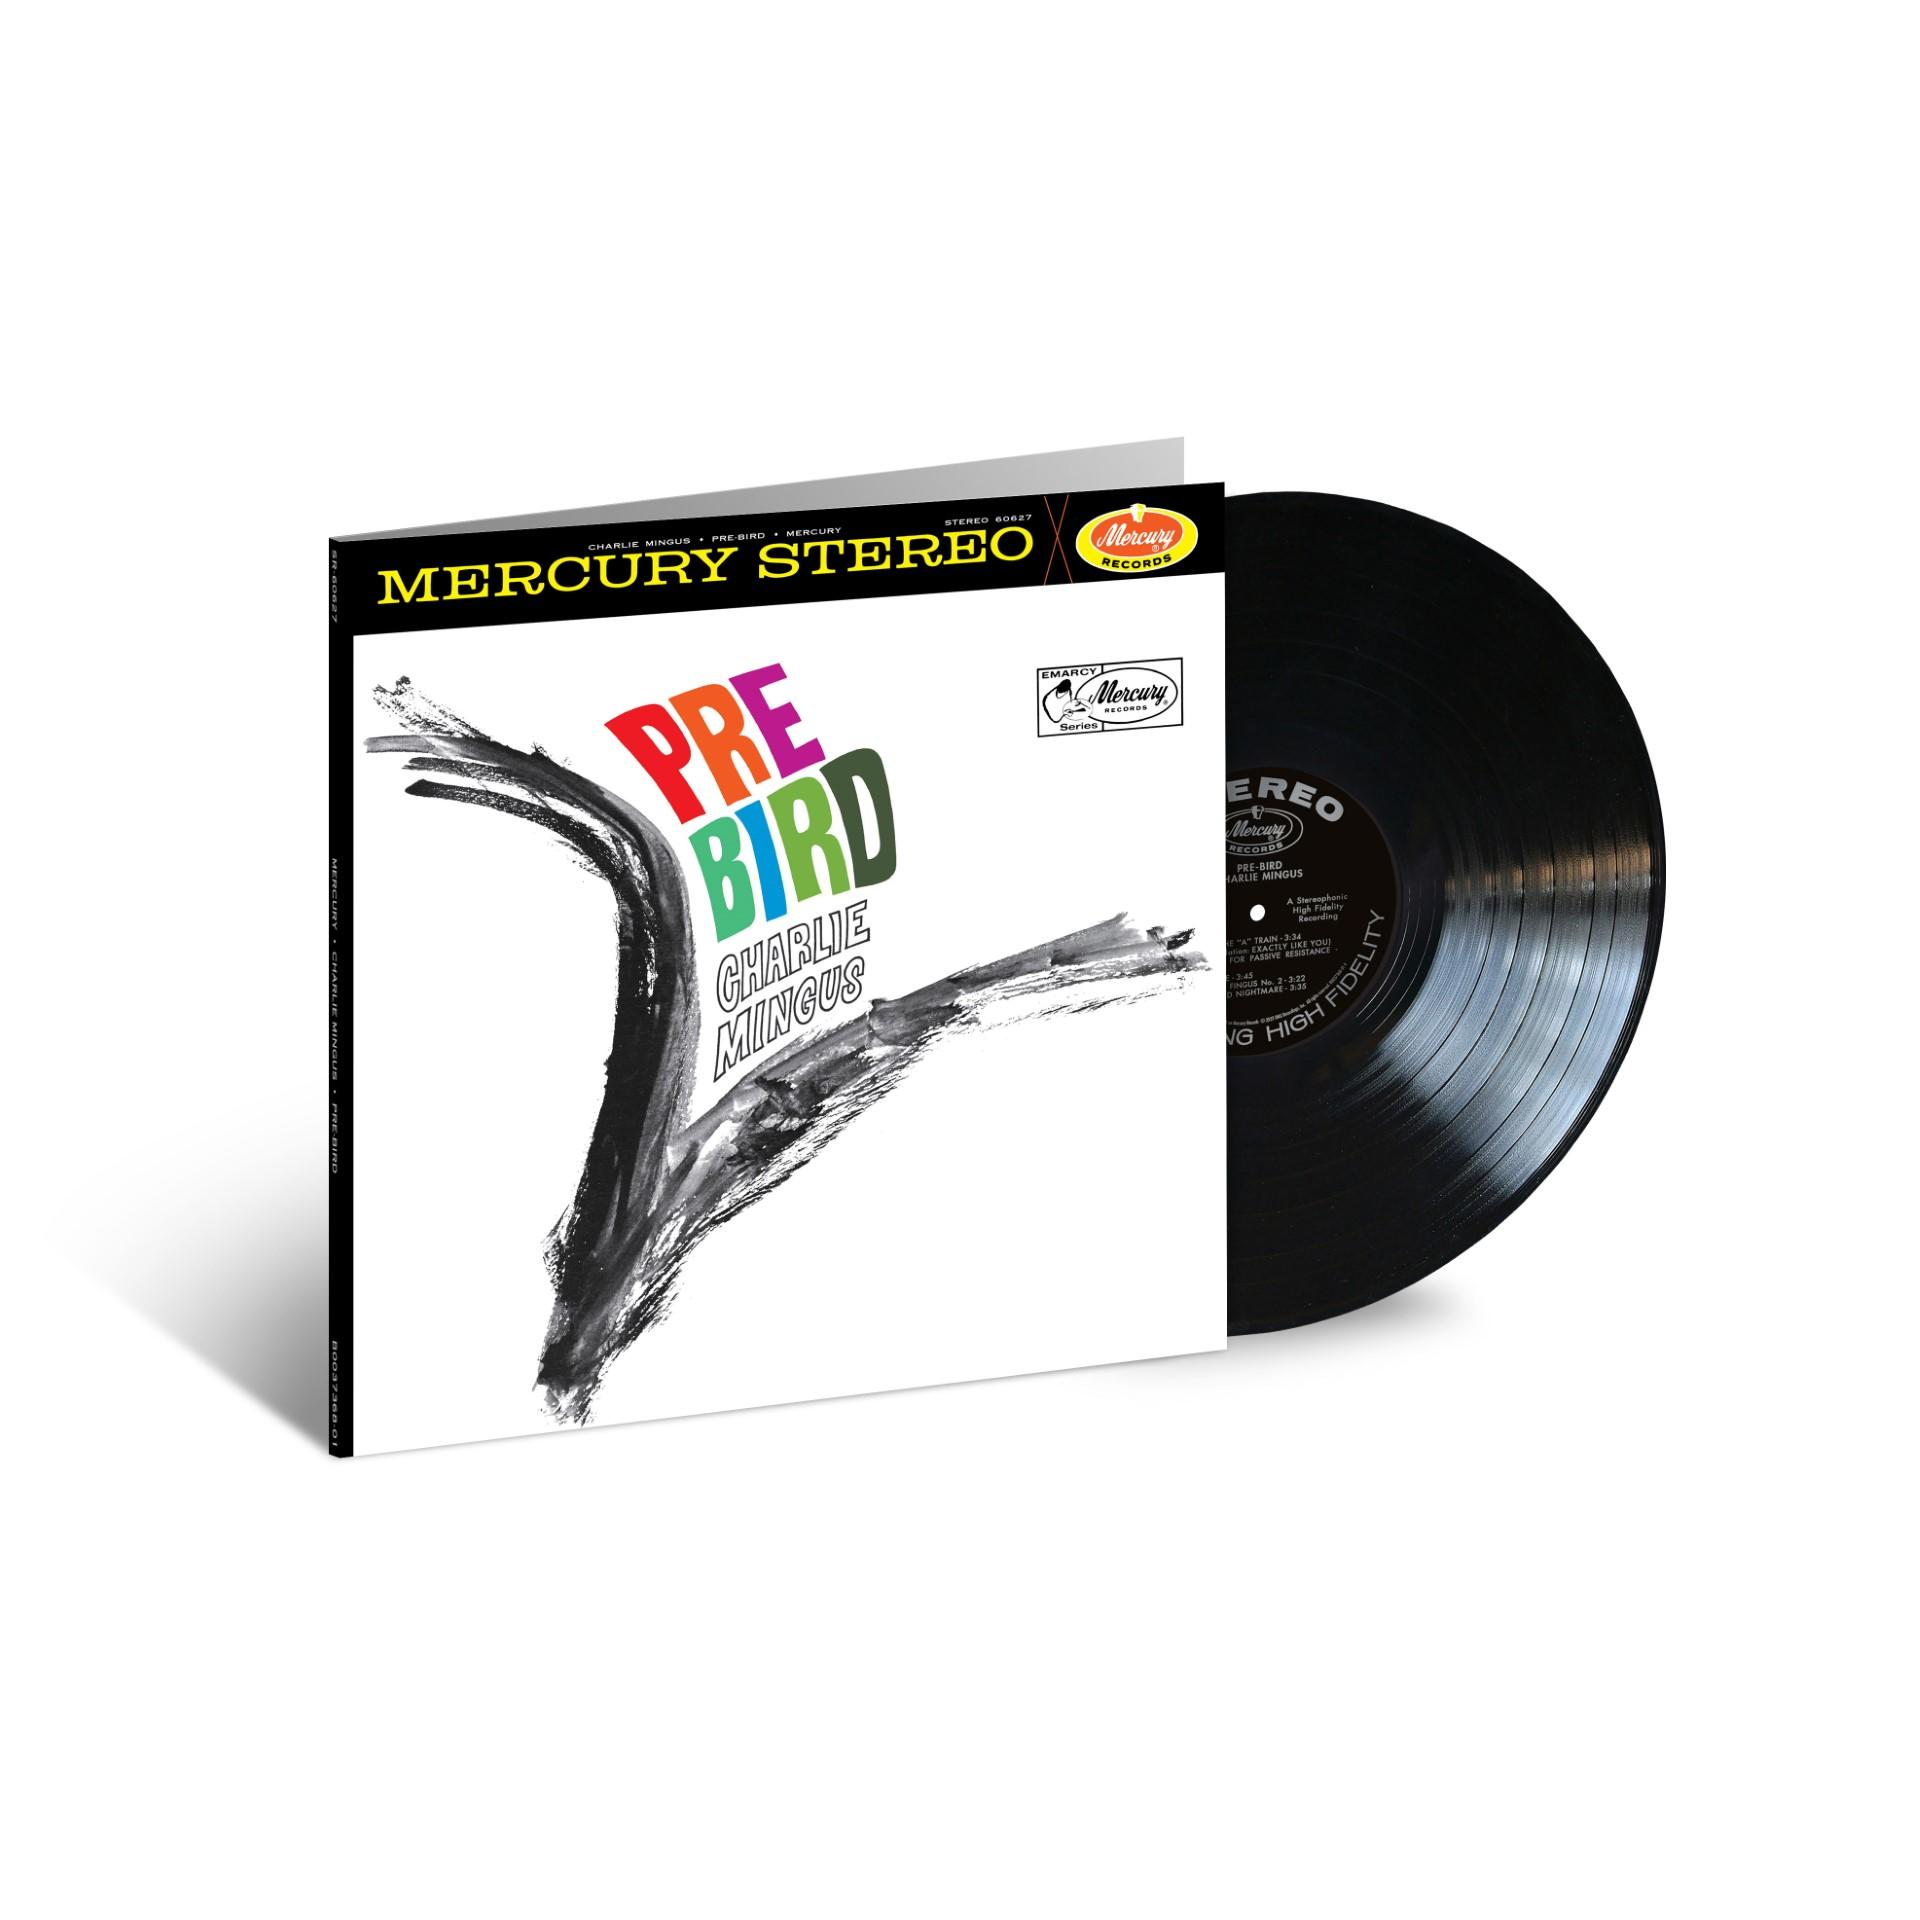 Charles Mingus - Pre-Bird (Acoustic (Vinyl) Sounds) 